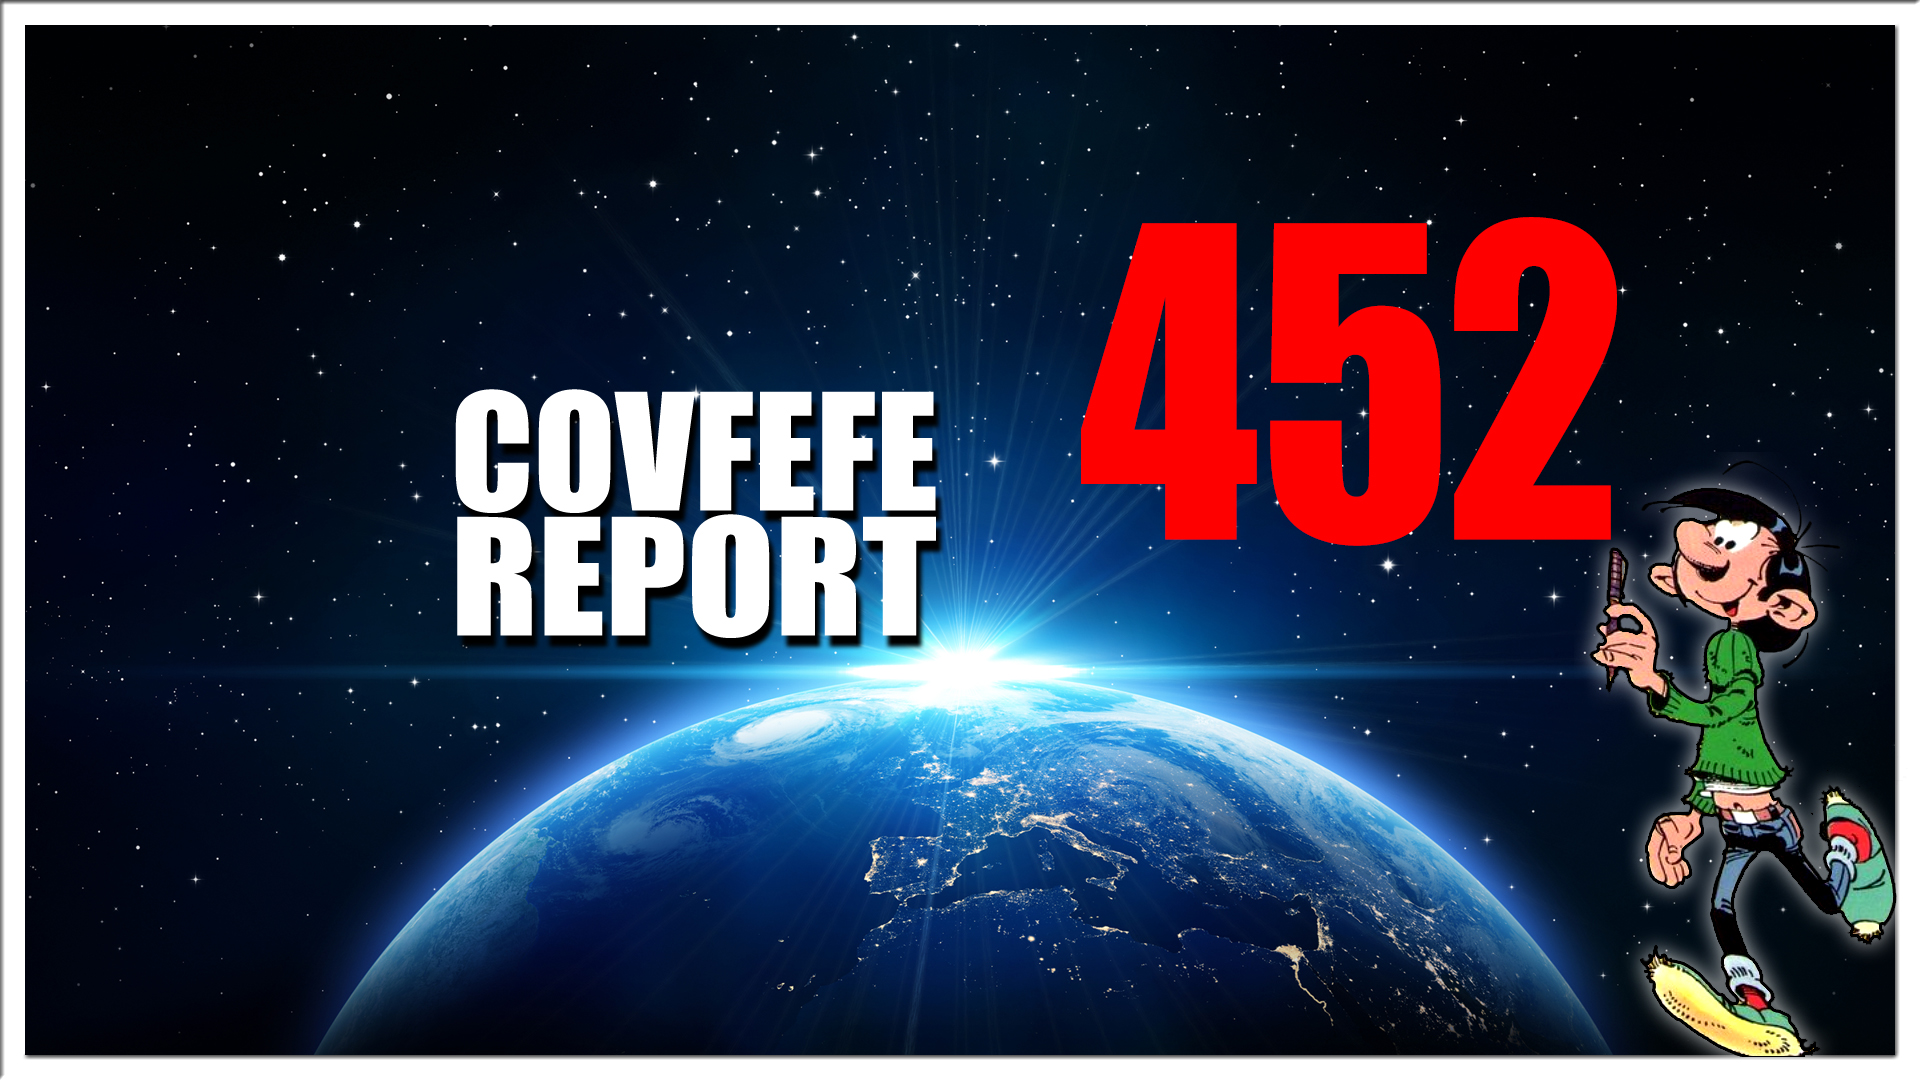 Covfefe Report 452. Only the beginning, Colonial Pipeline, Durham, Tom Cruise, Arjen Robben, telegram reacties